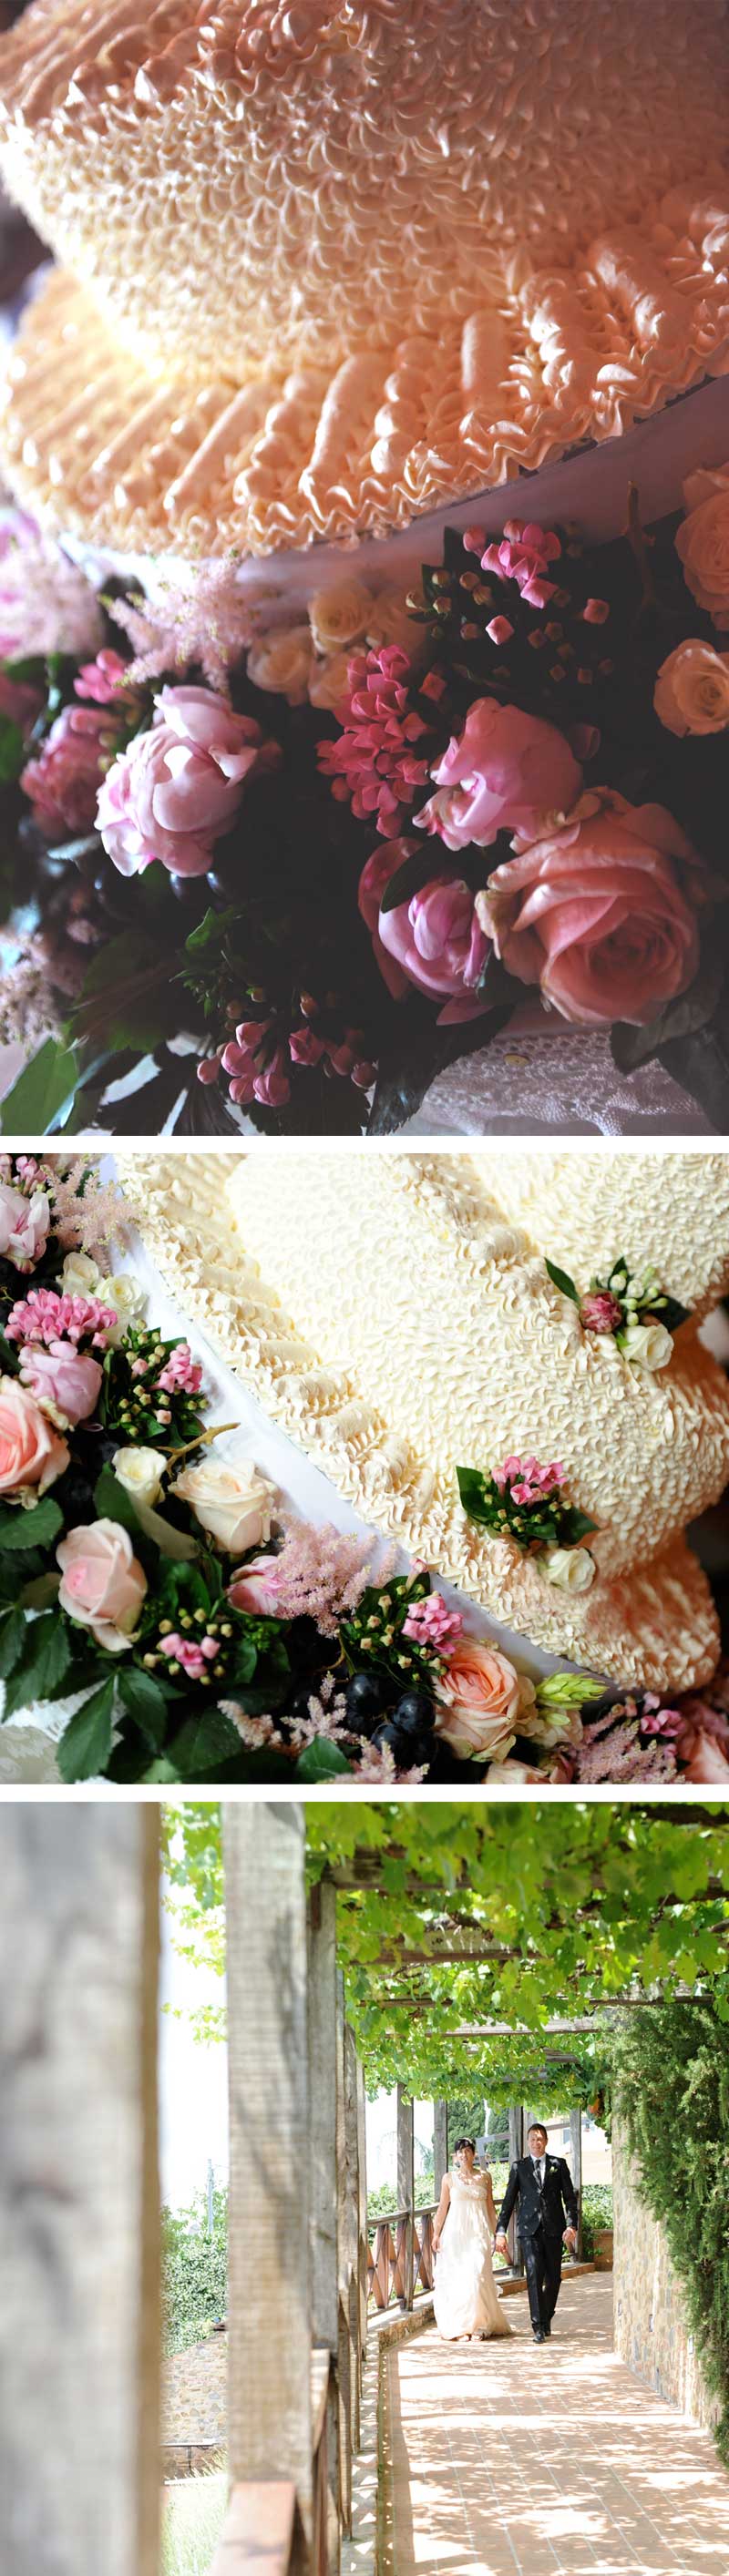 Matrimonio Country Tema Vino: Torta nuziale decorata all'americana